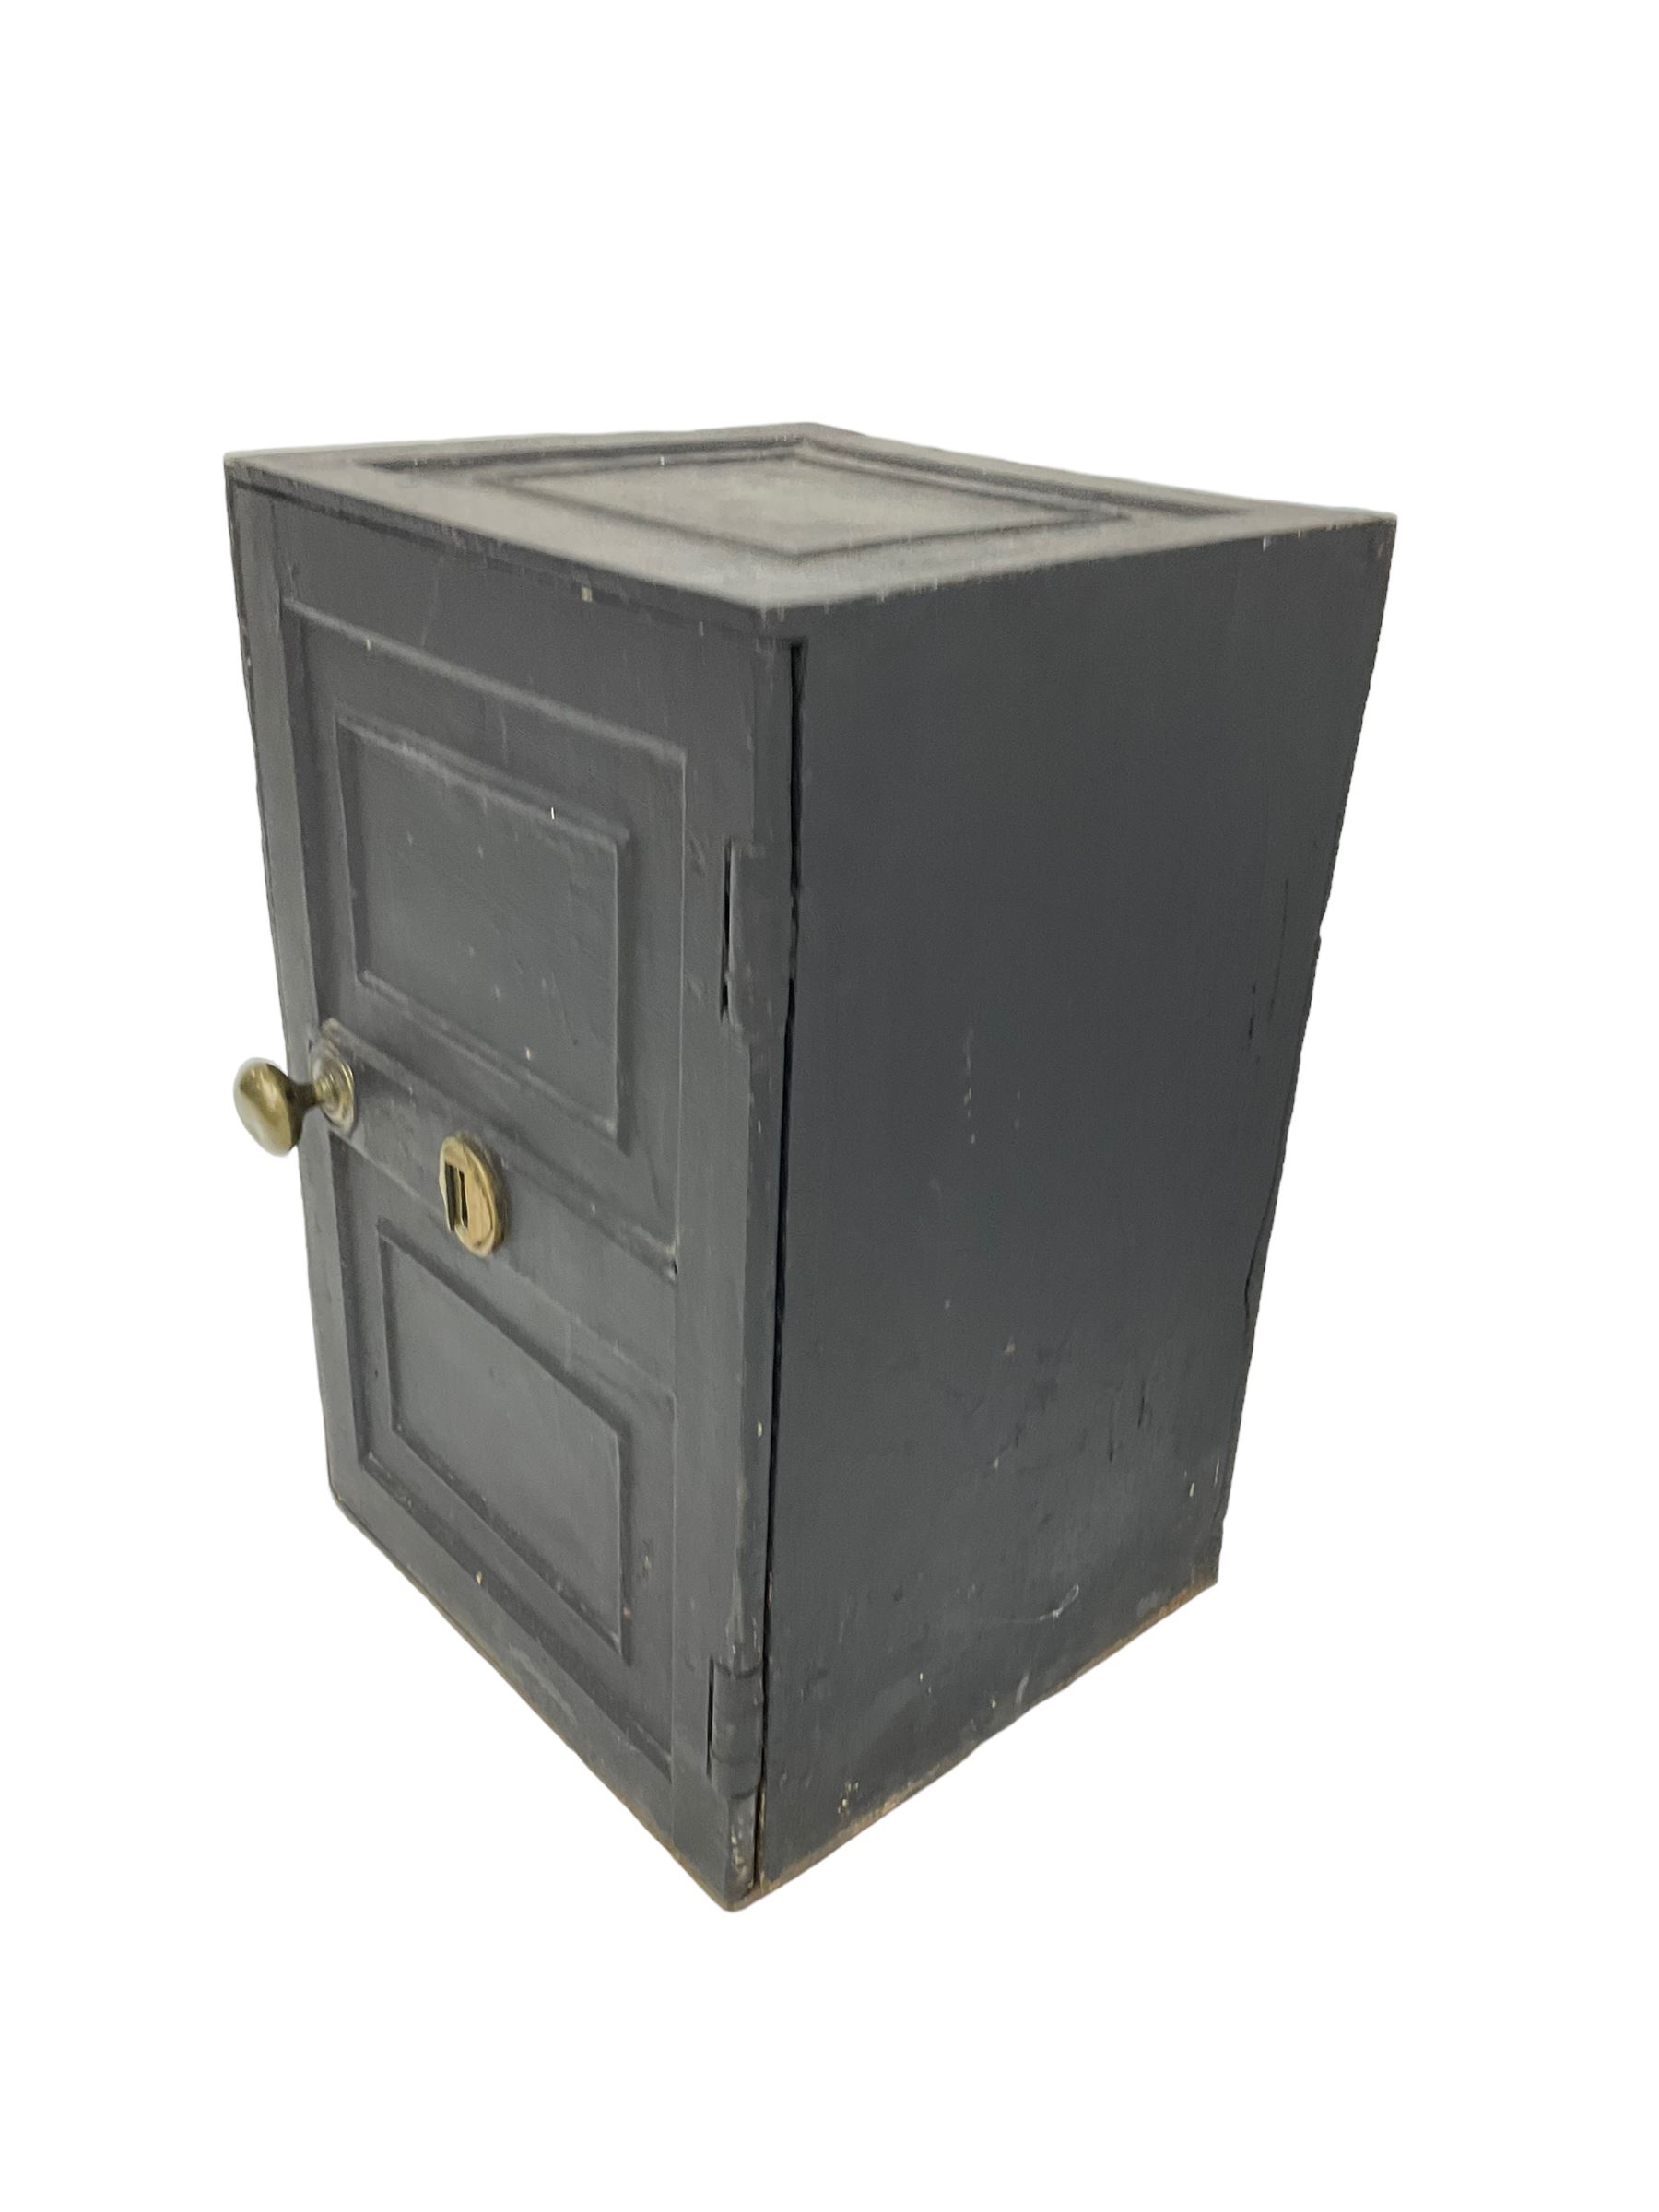 Black painted cast iron safe - Image 3 of 6